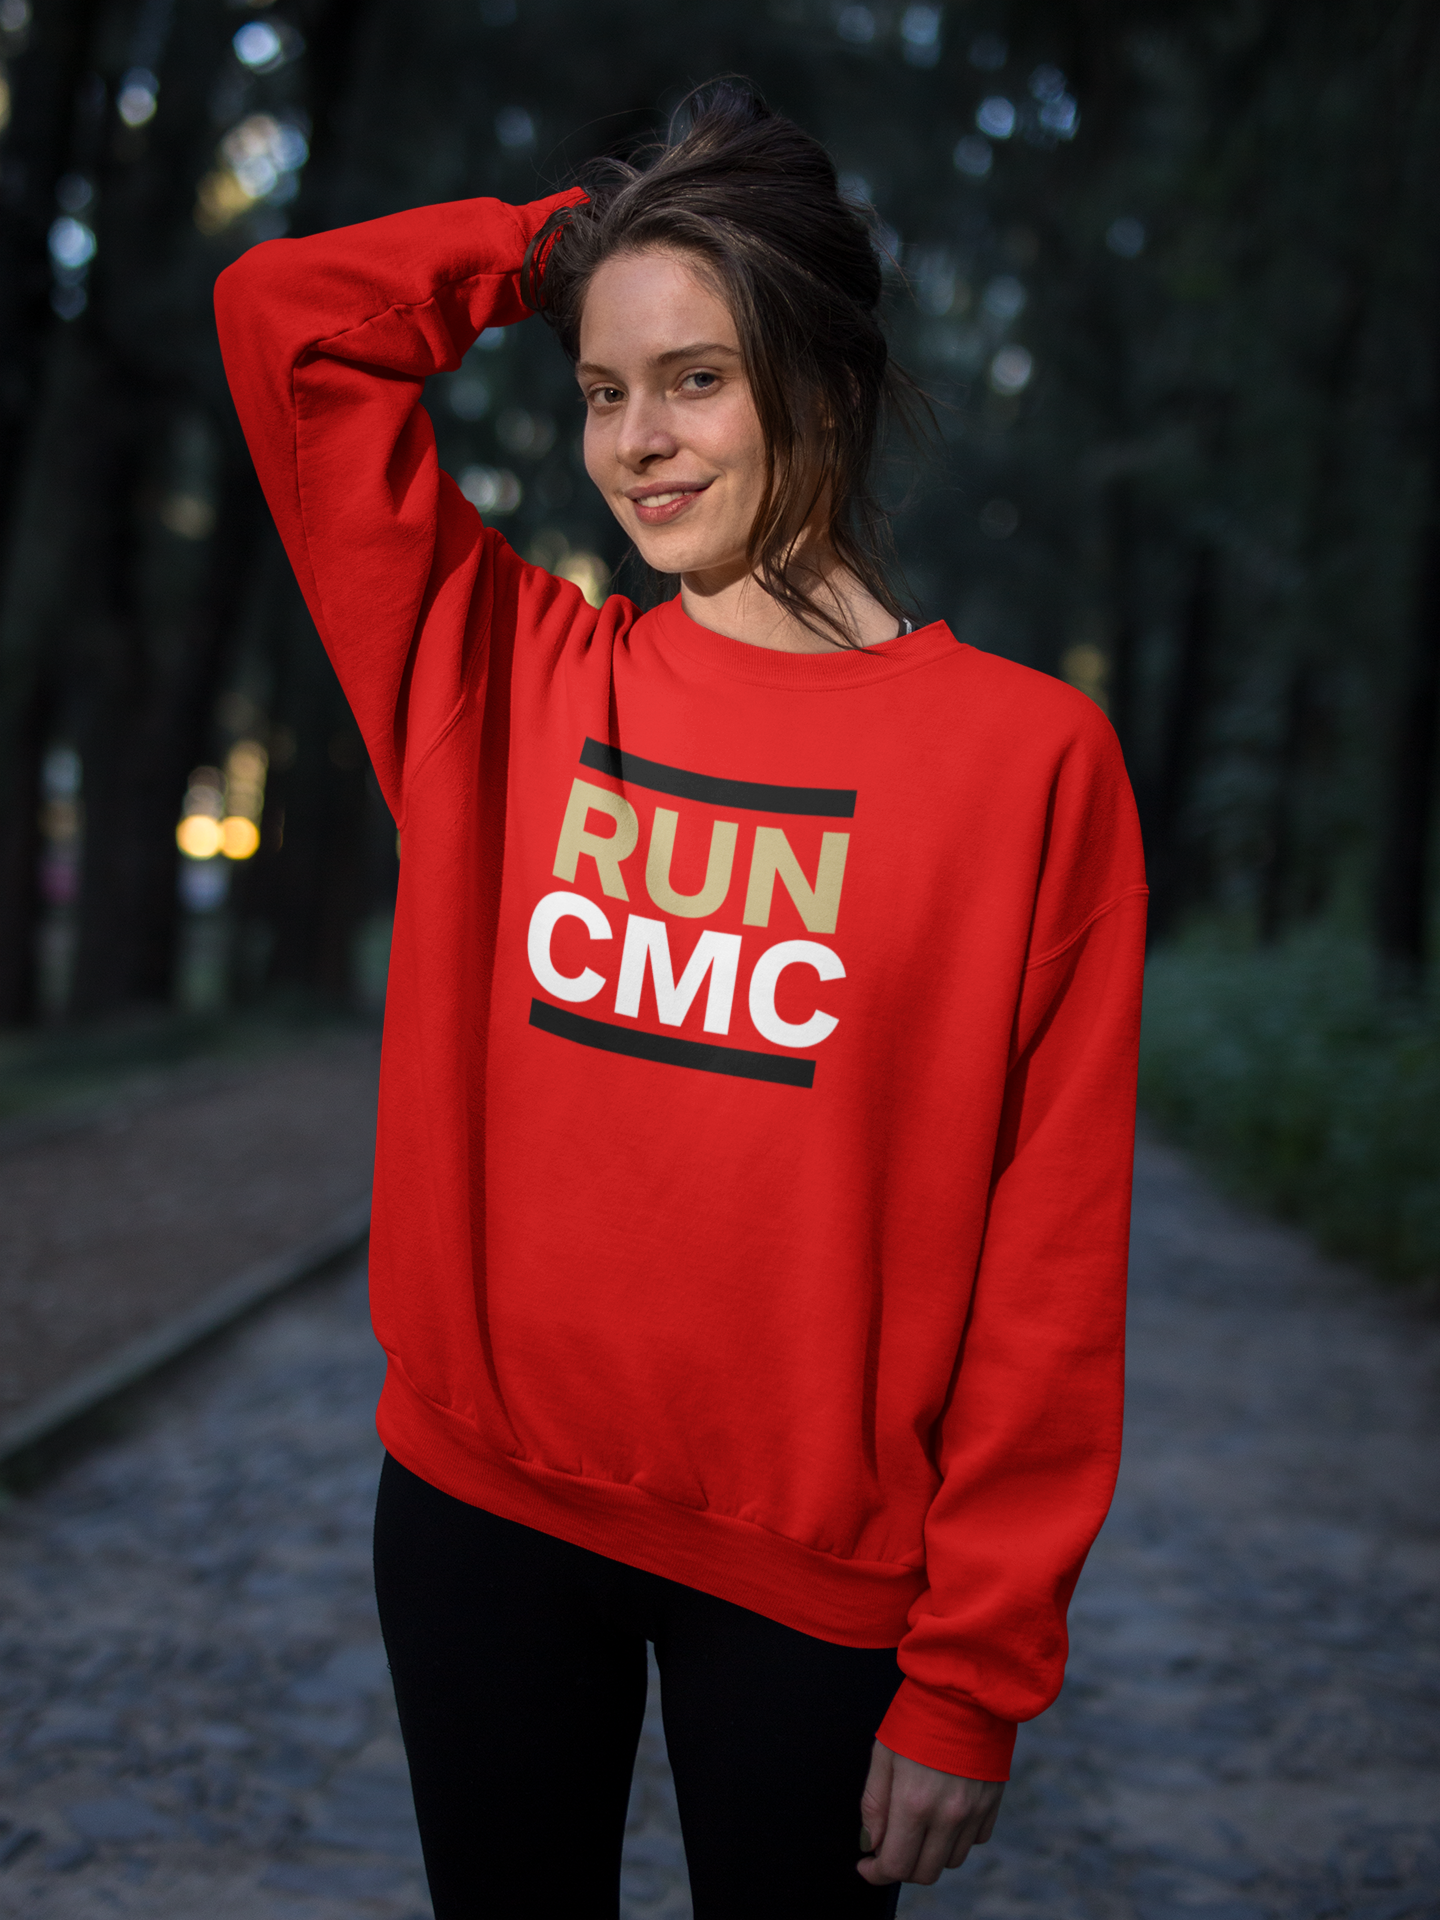 McCaffrey Run CMC Sweatshirt, San Francisco Gift, Niners Shirt, San Fran